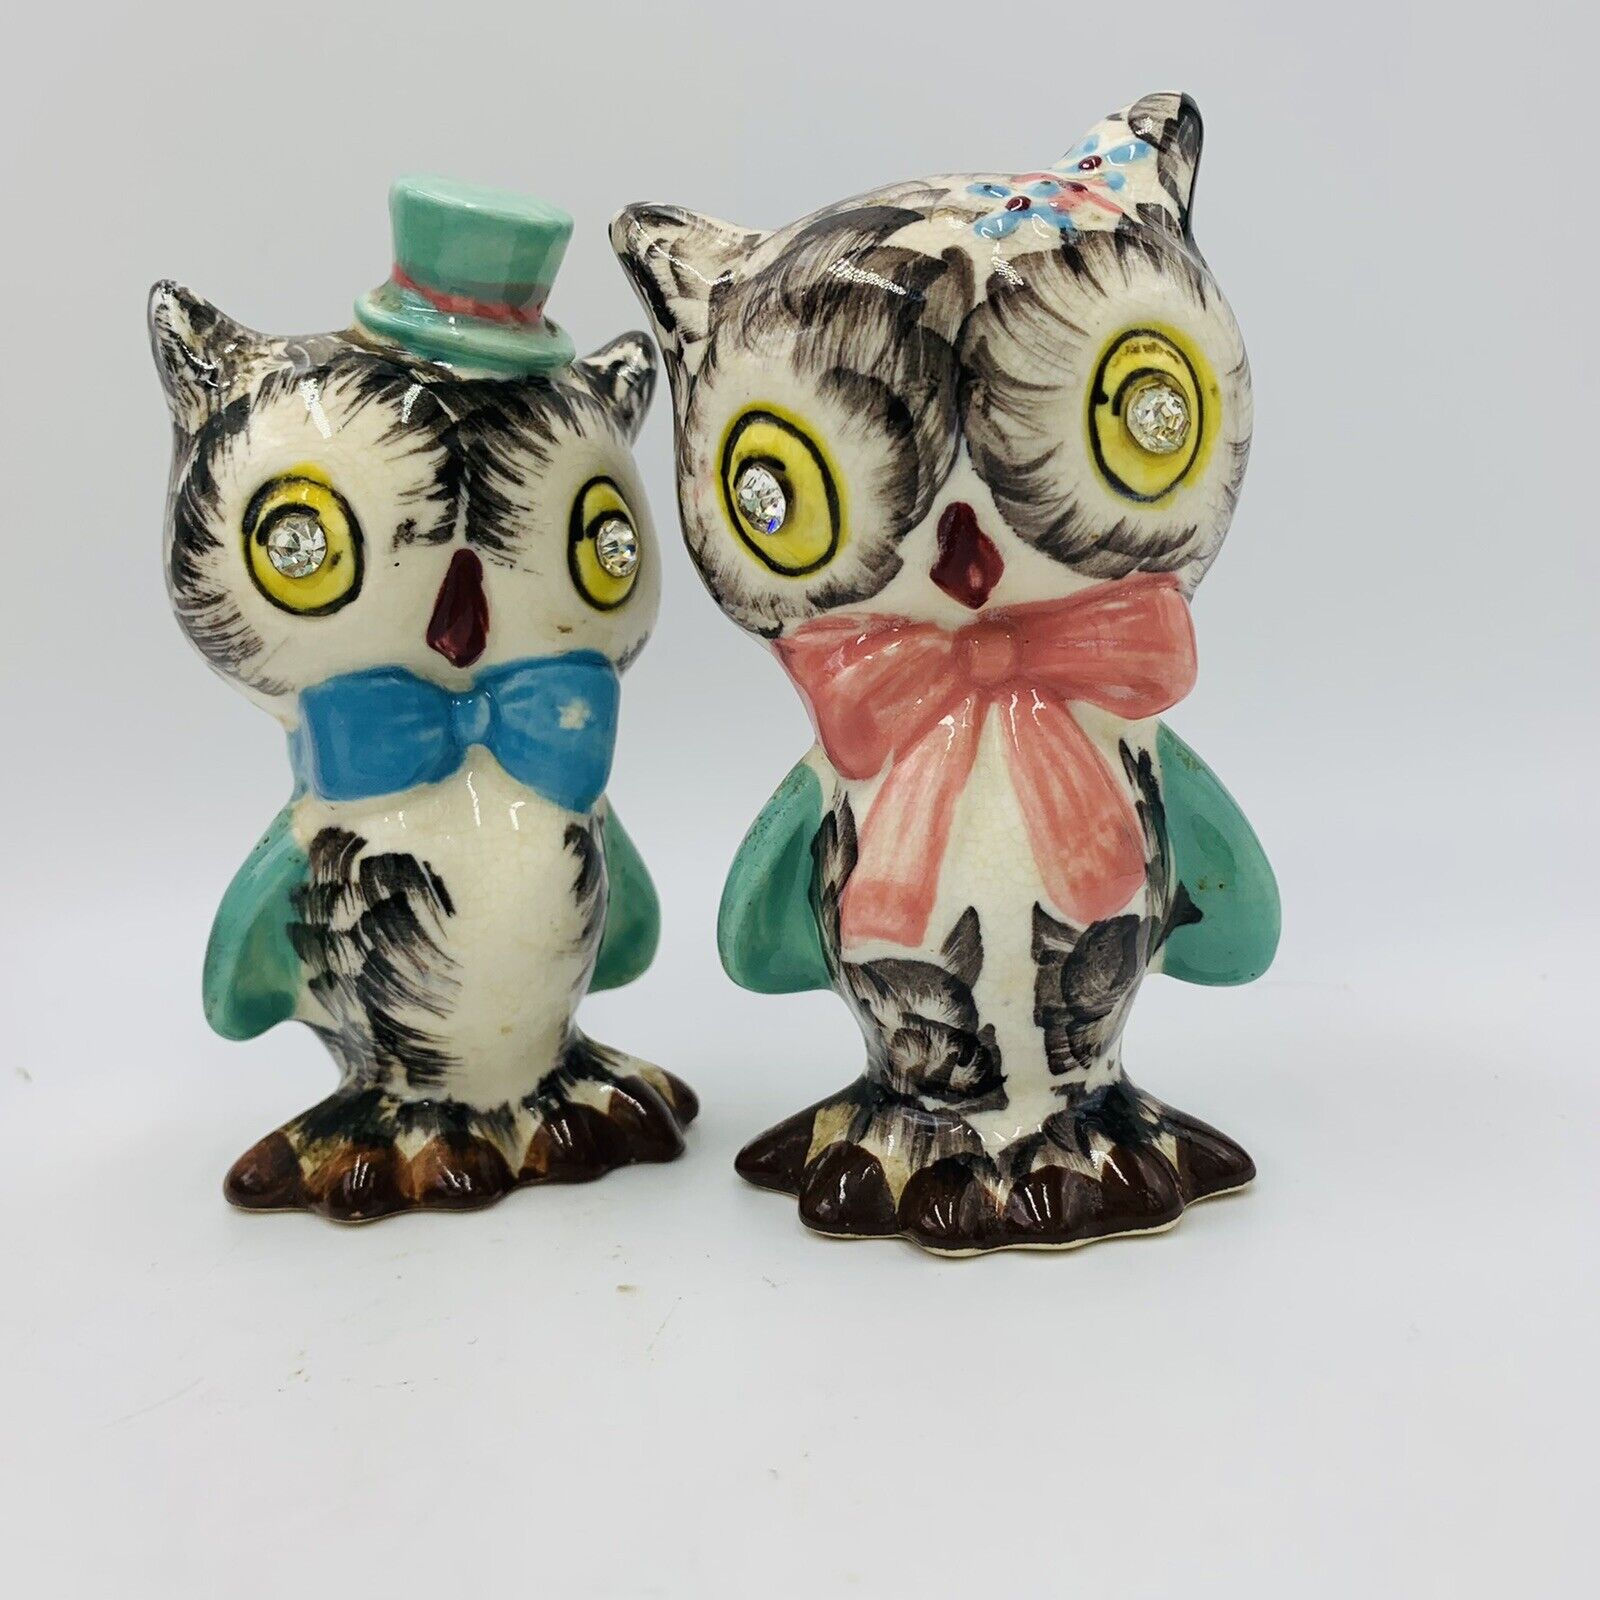 VTg OWL SALT AND PEPPER SHAKERS Anthropomorphic Rhinestone Norcrest Japan Kitsch